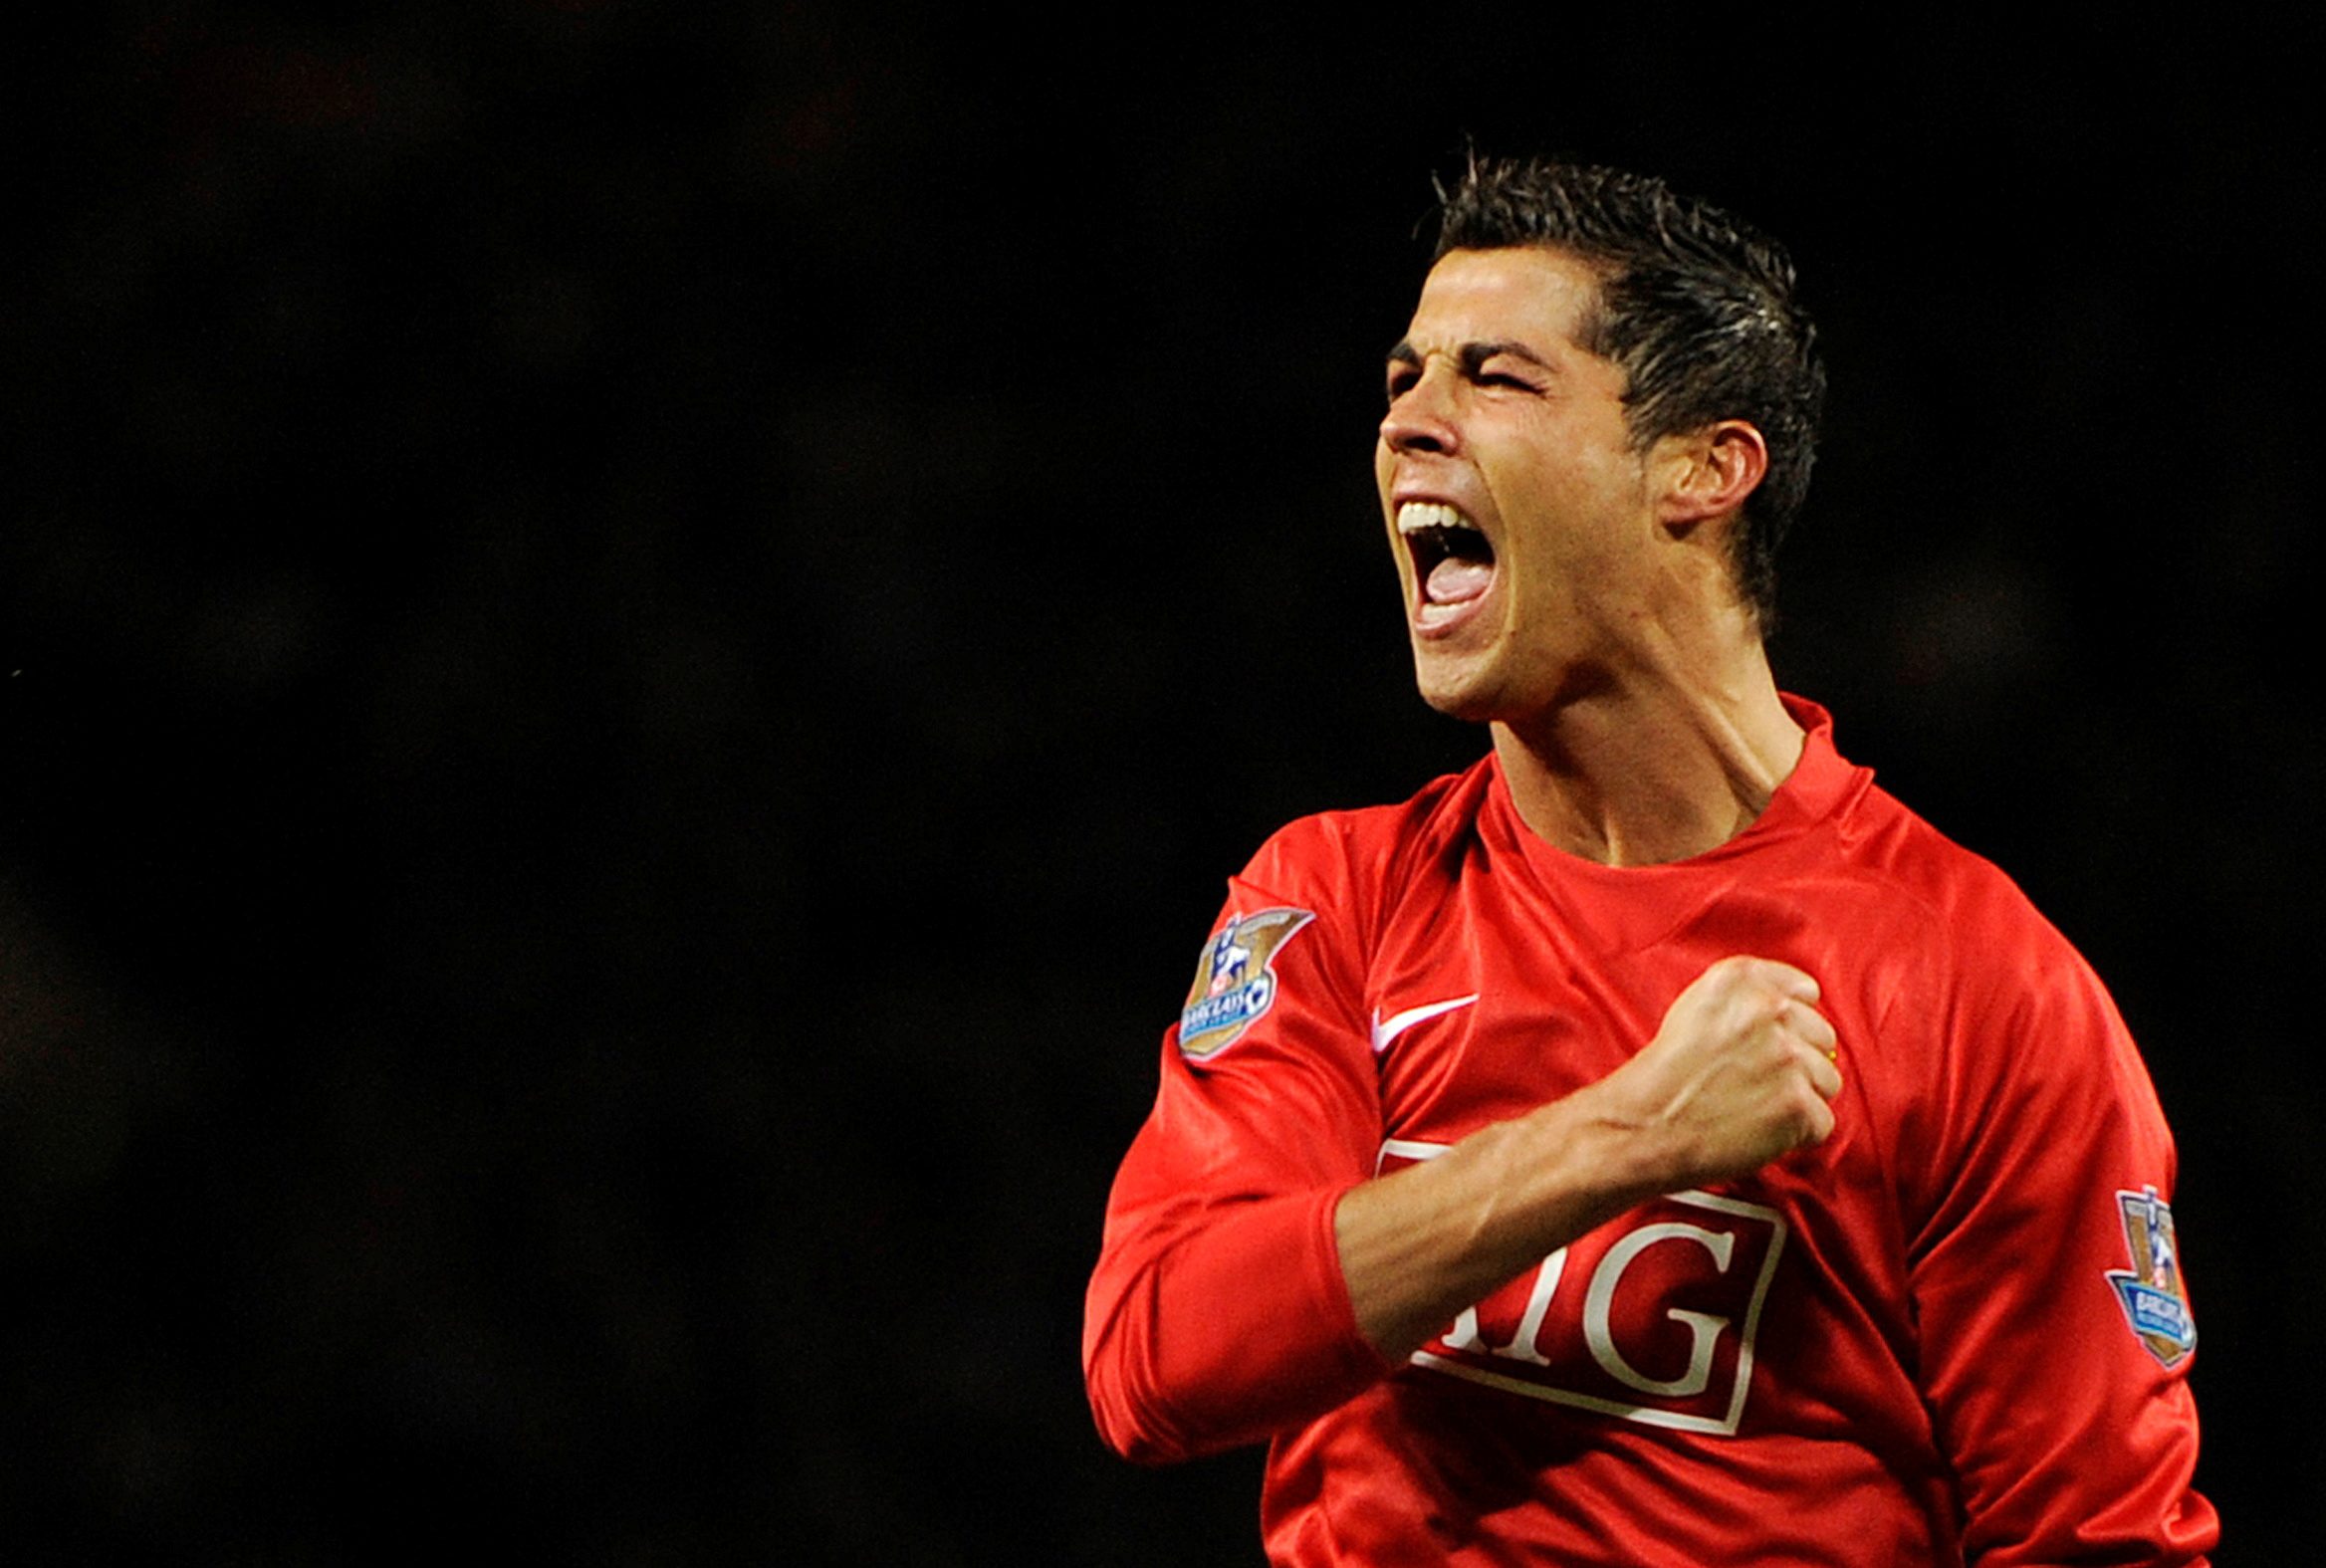 Ronaldo’s return to United sparks hopes of reviving glory days